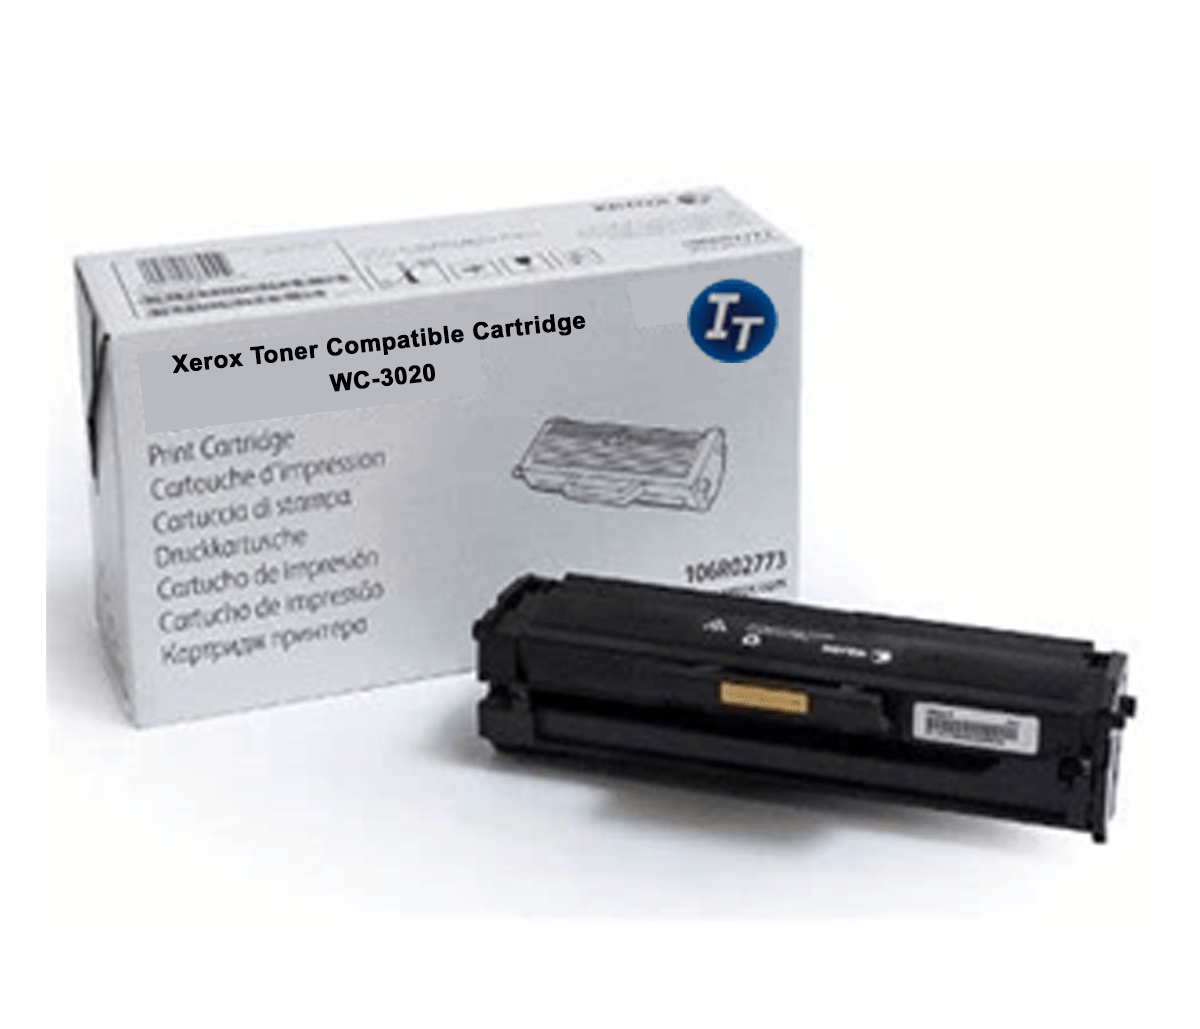 Xerox Toner Compatible Cartridge WC-3020 (3).png